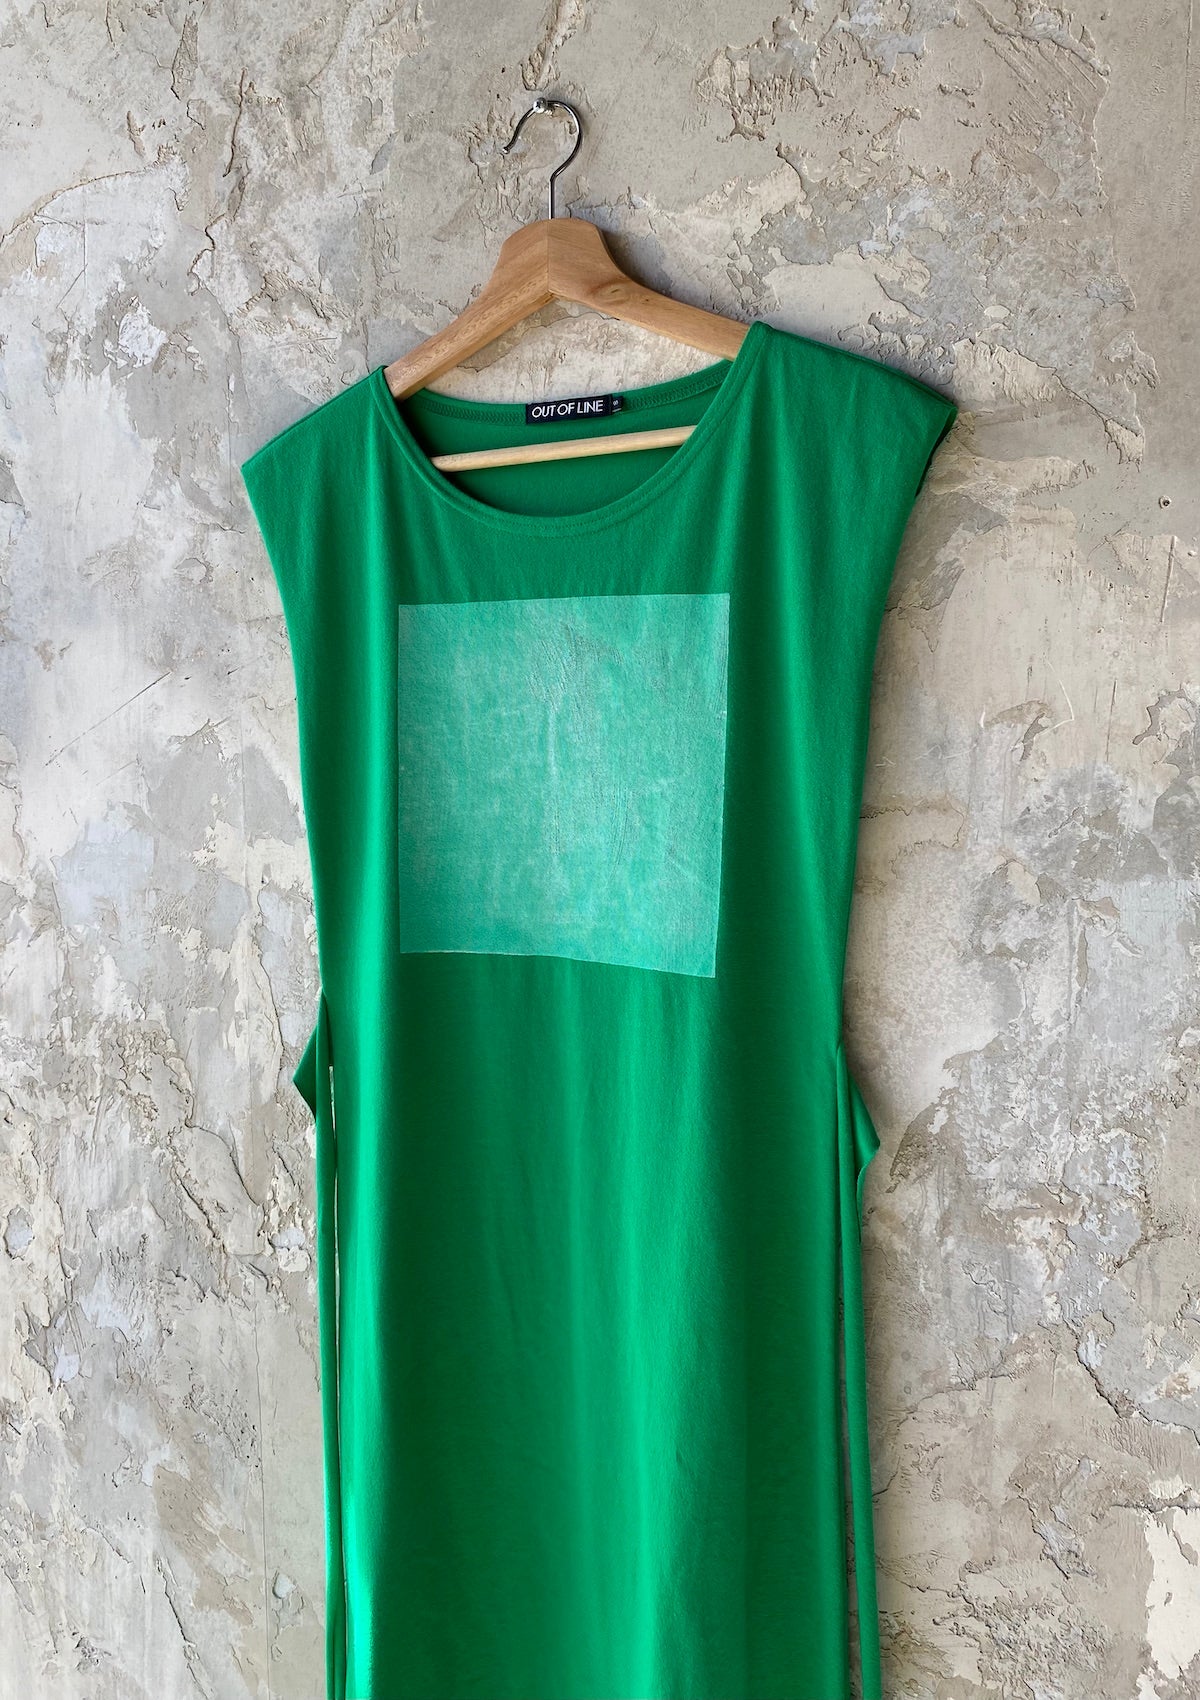 Medium, Square Dress, Bright Green